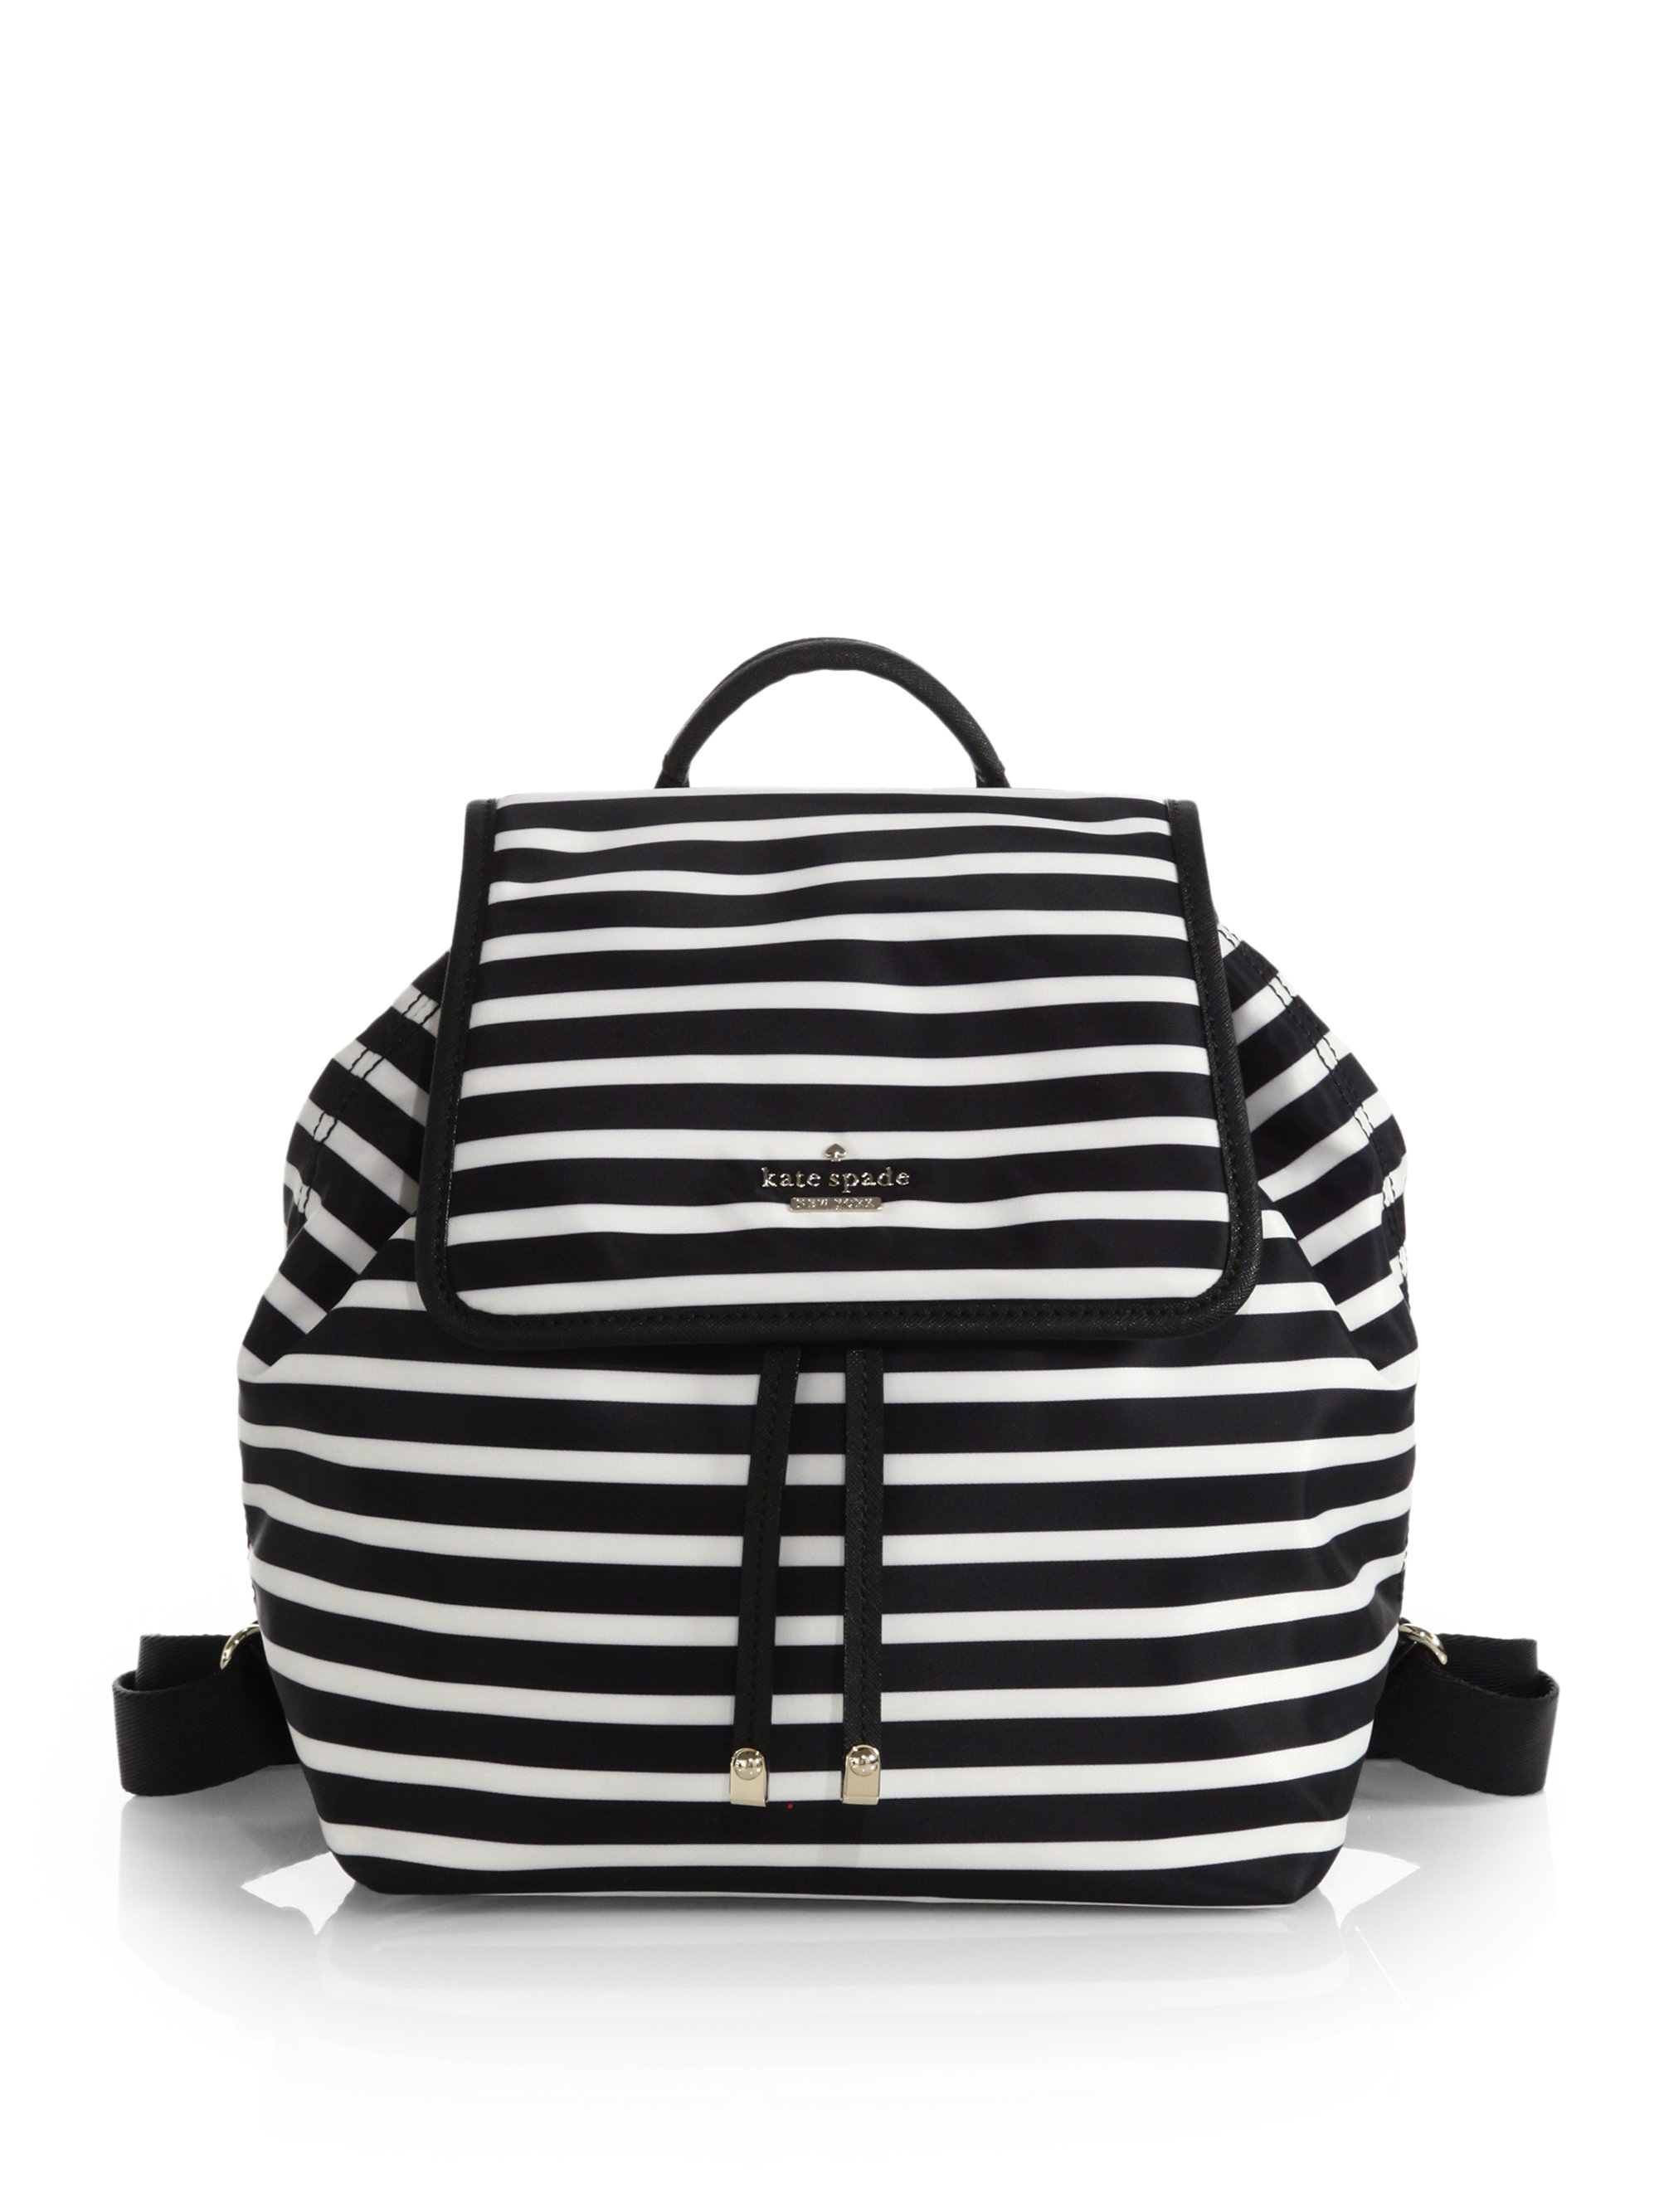 Arriba 106+ imagen kate spade black and white striped backpack